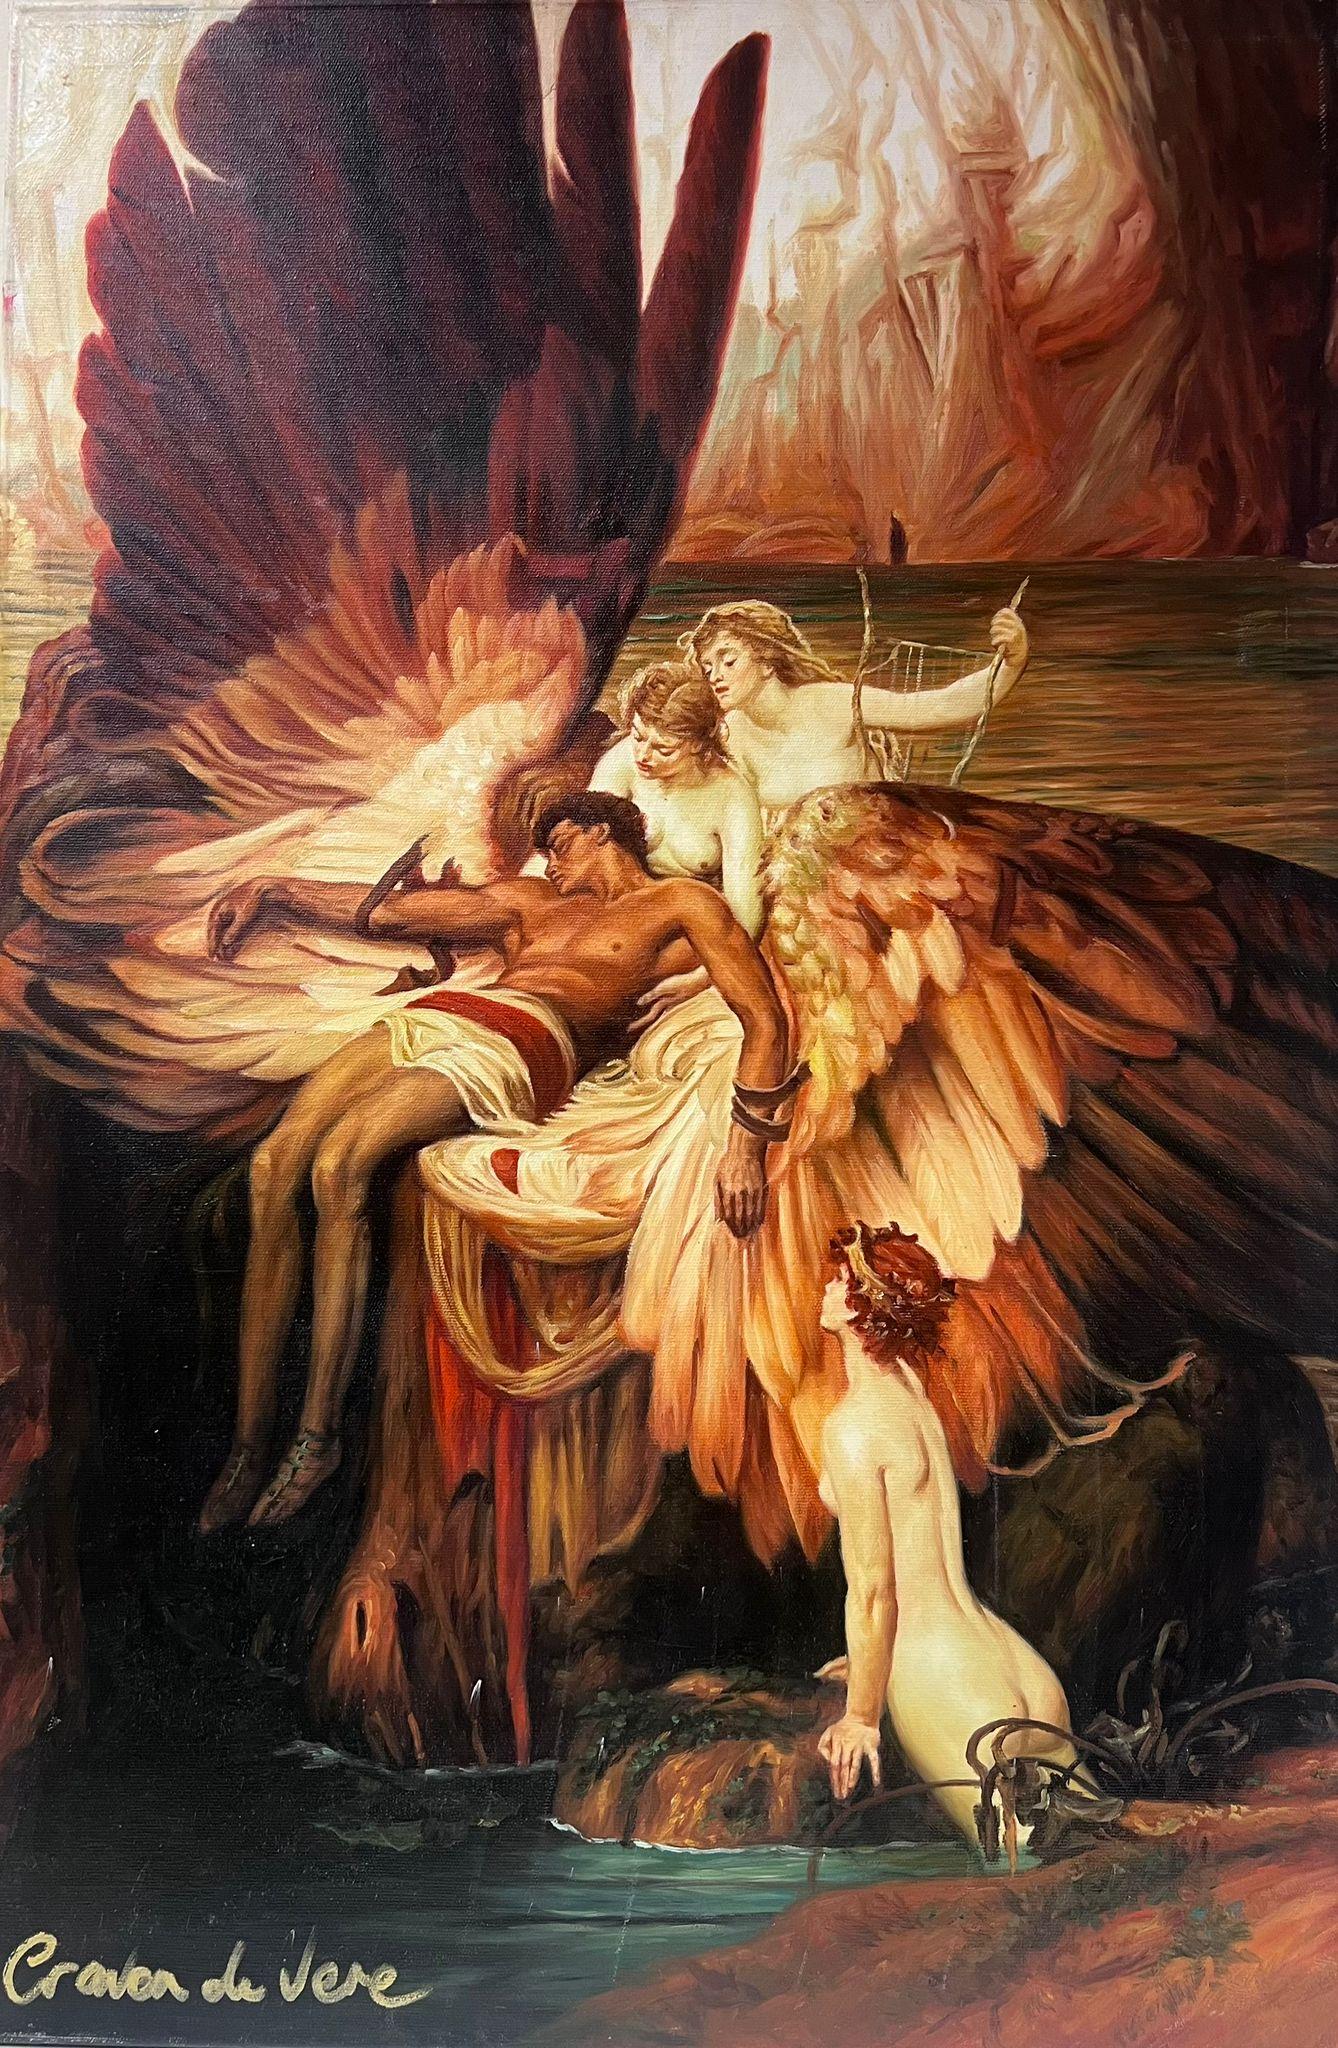 after Herbert James Draper Figurative Painting – The Lament of Icarus, großes signiertes Ölgemälde auf Leinwand, mythologische Akte